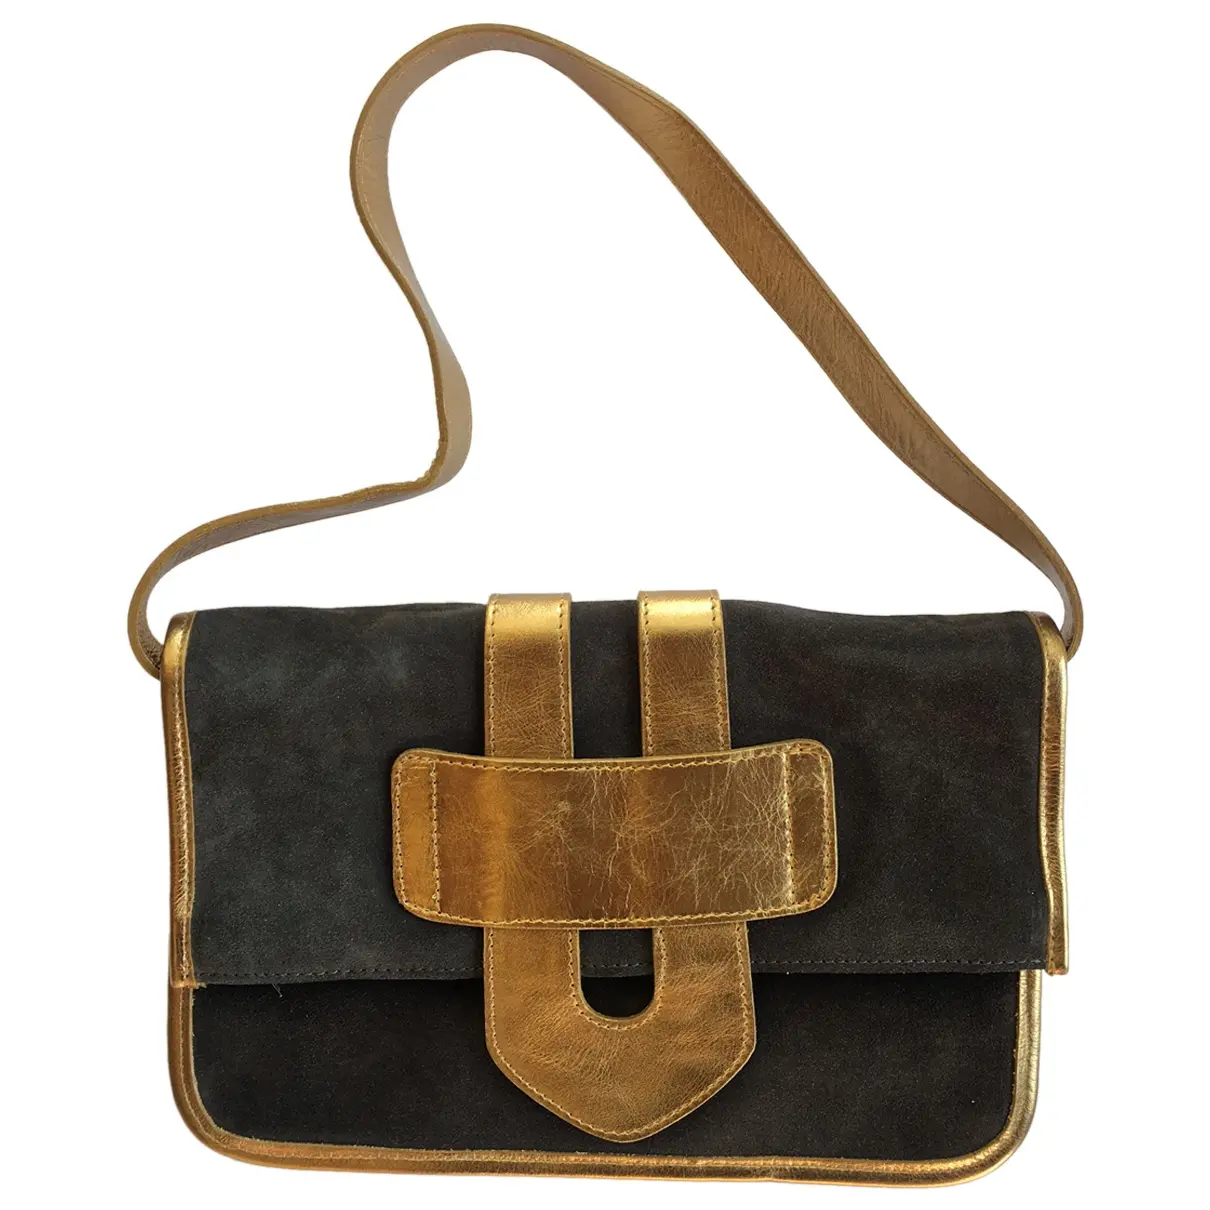 Leather handbag Tila March